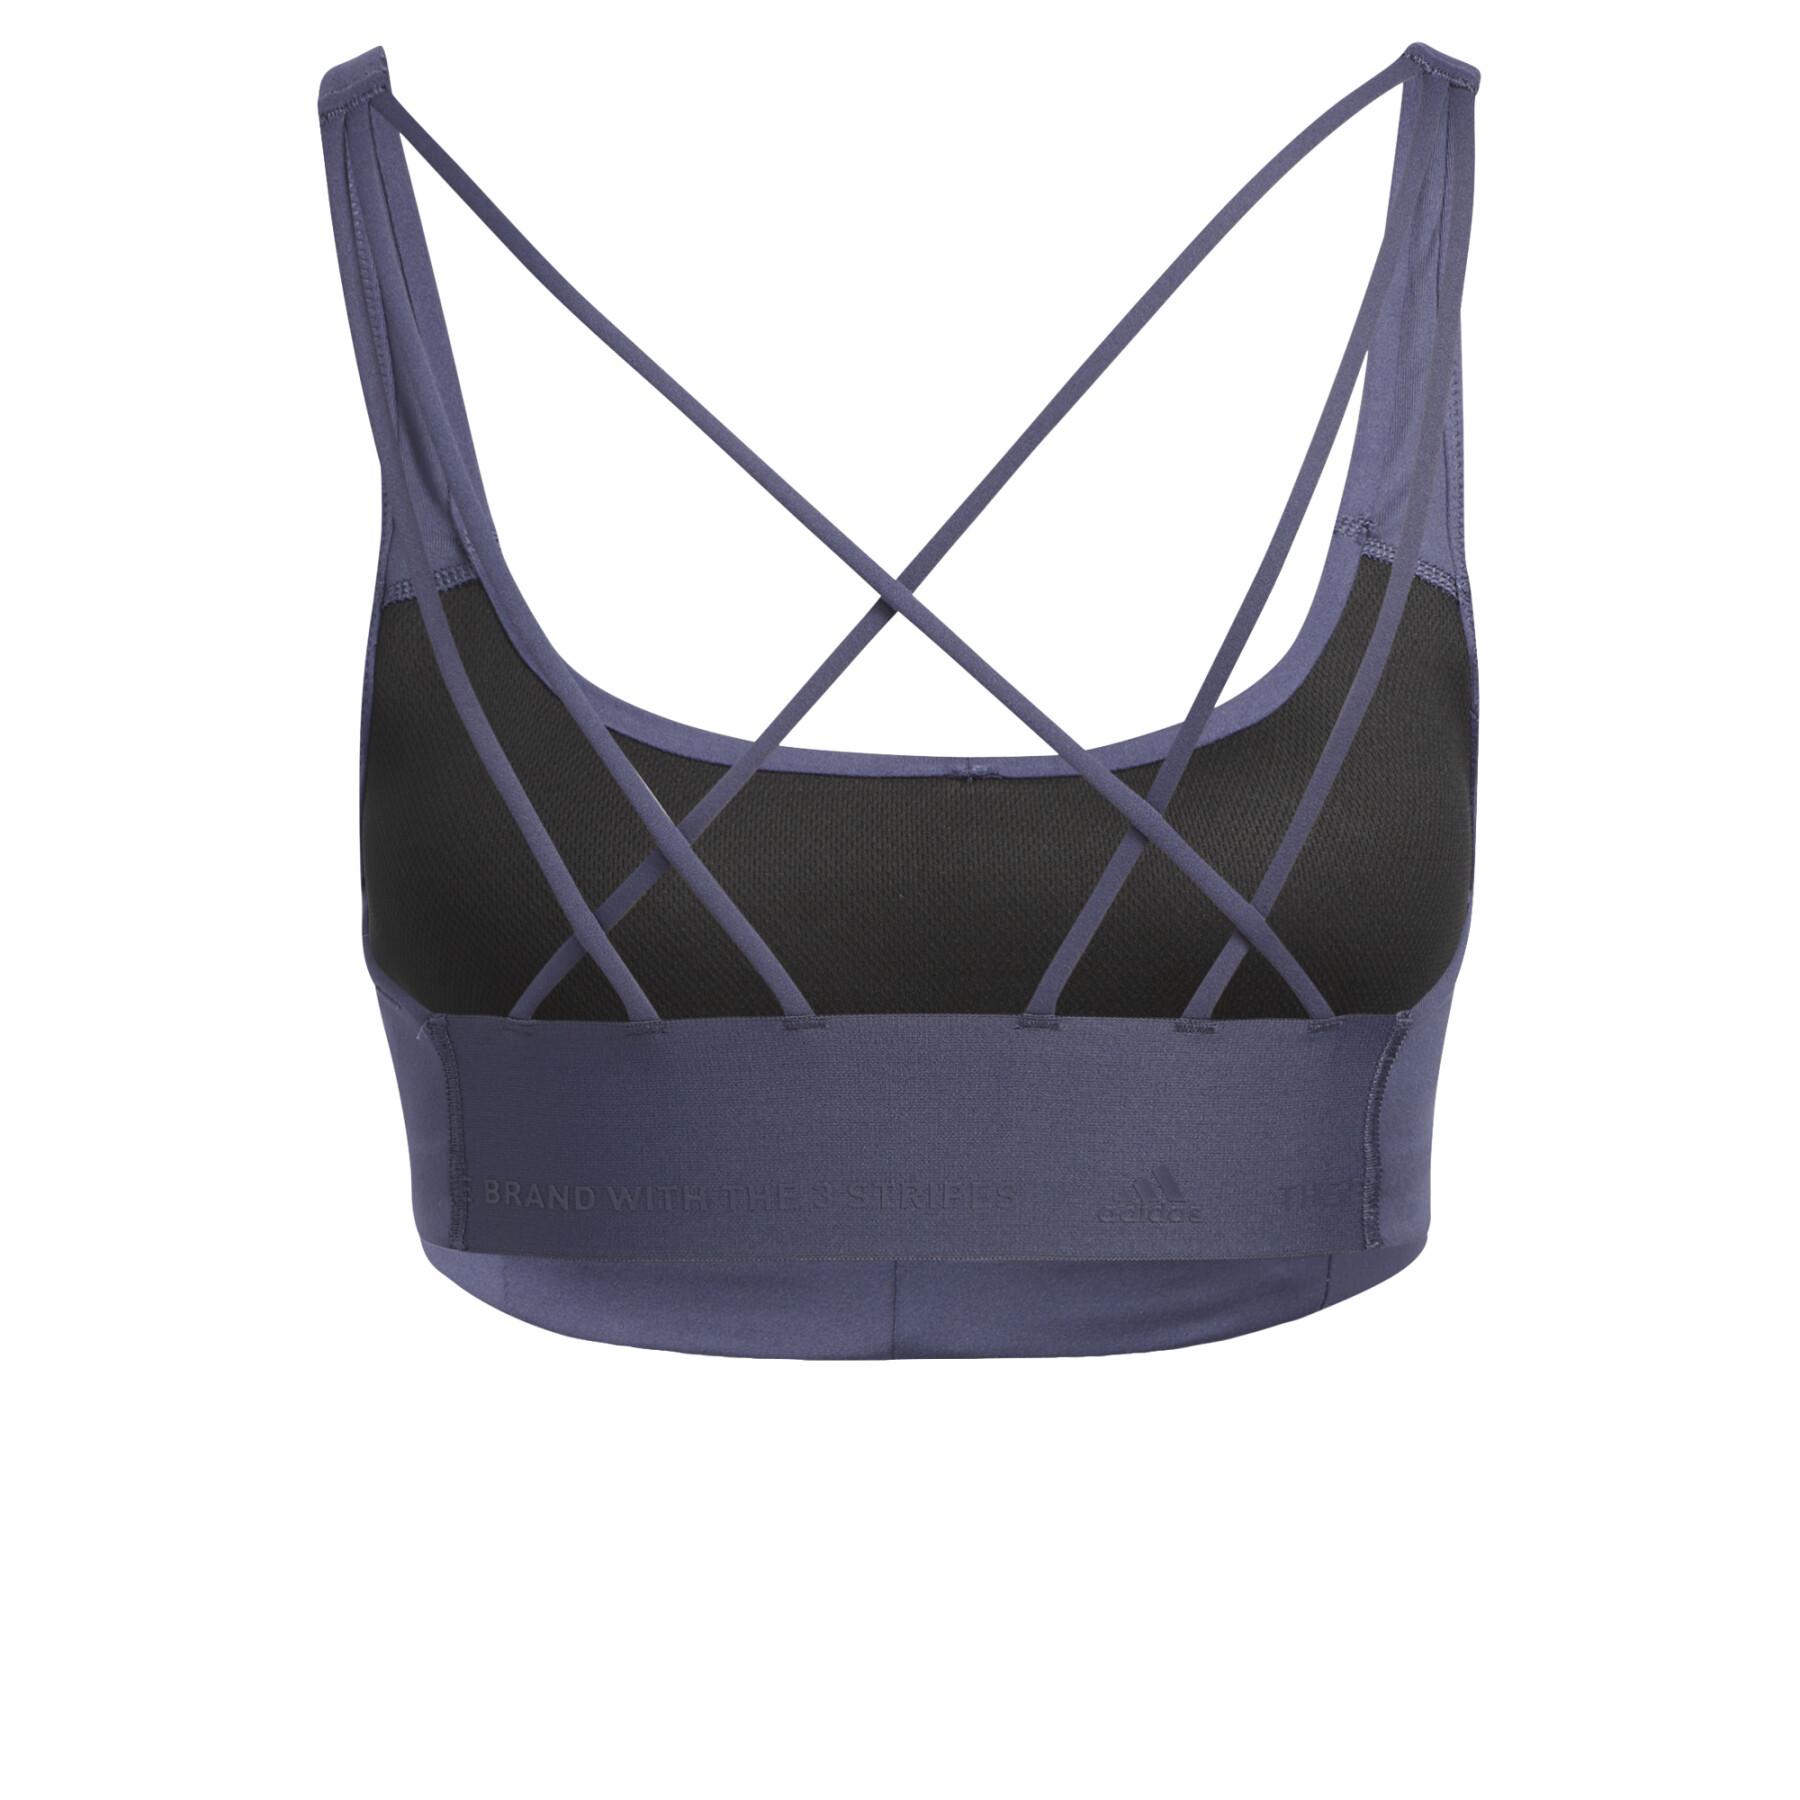 Women's bra adidas Coreflow Medium-Support